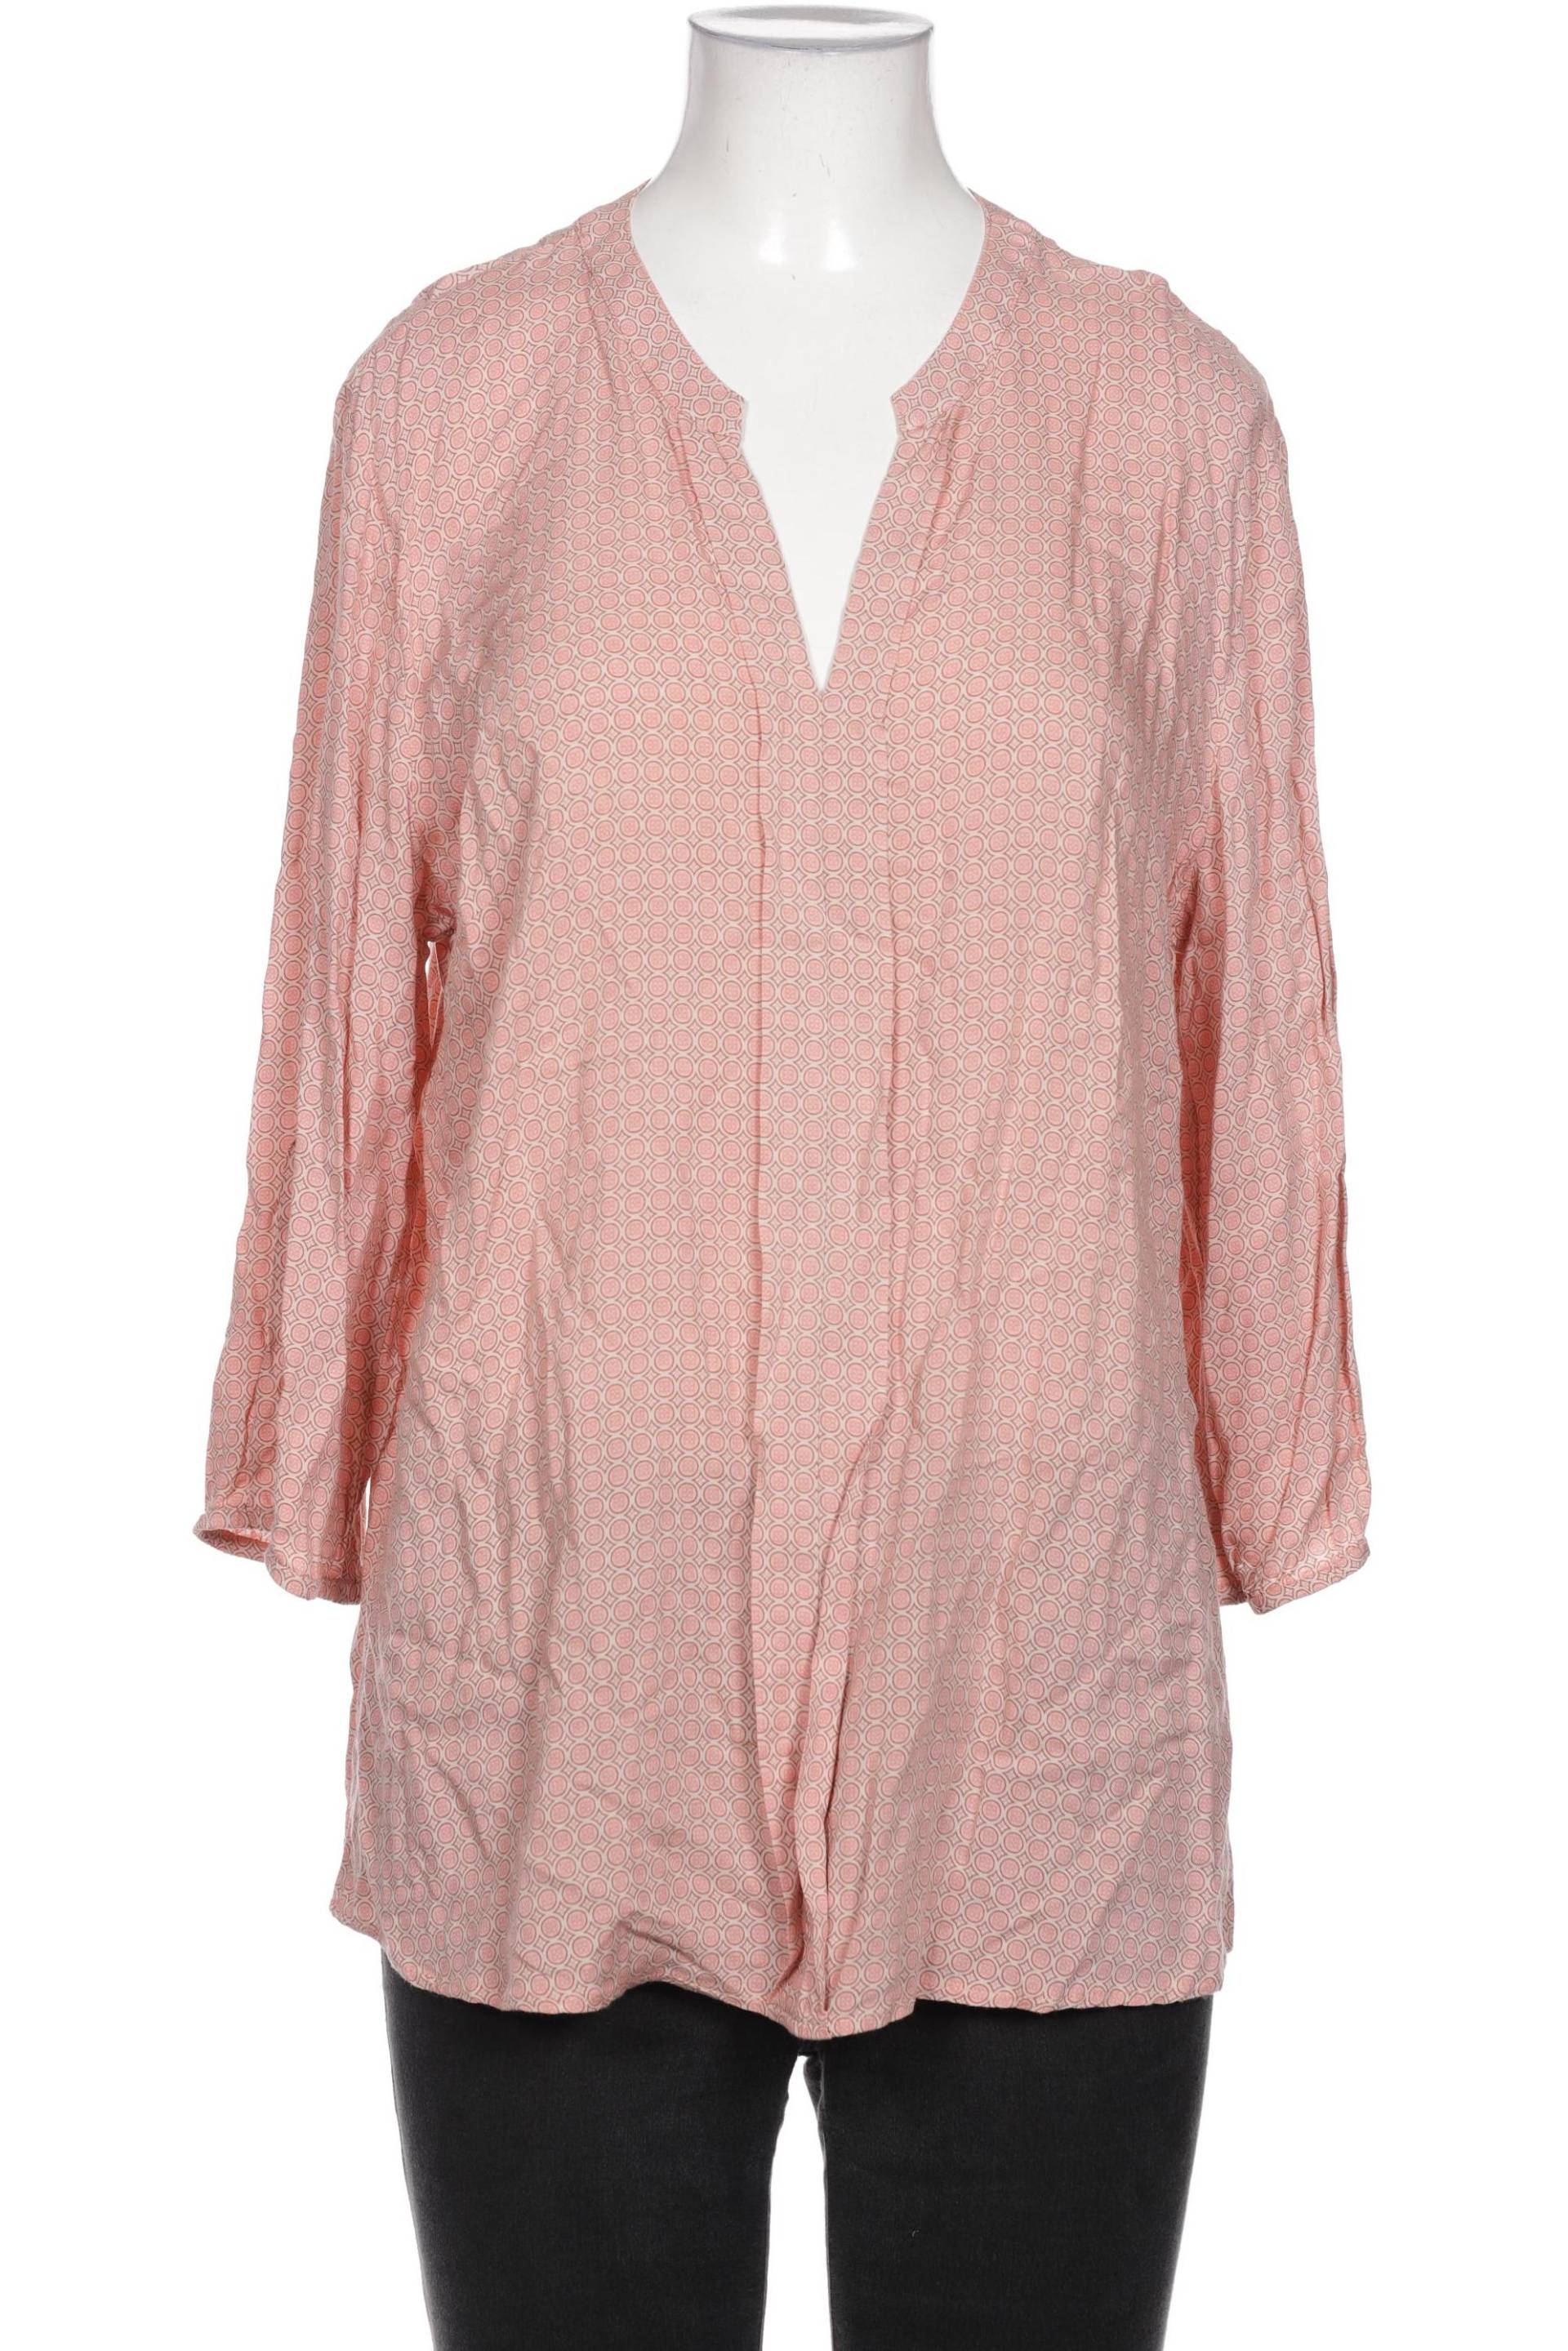 Betty Barclay Damen Bluse, pink, Gr. 38 von Betty Barclay